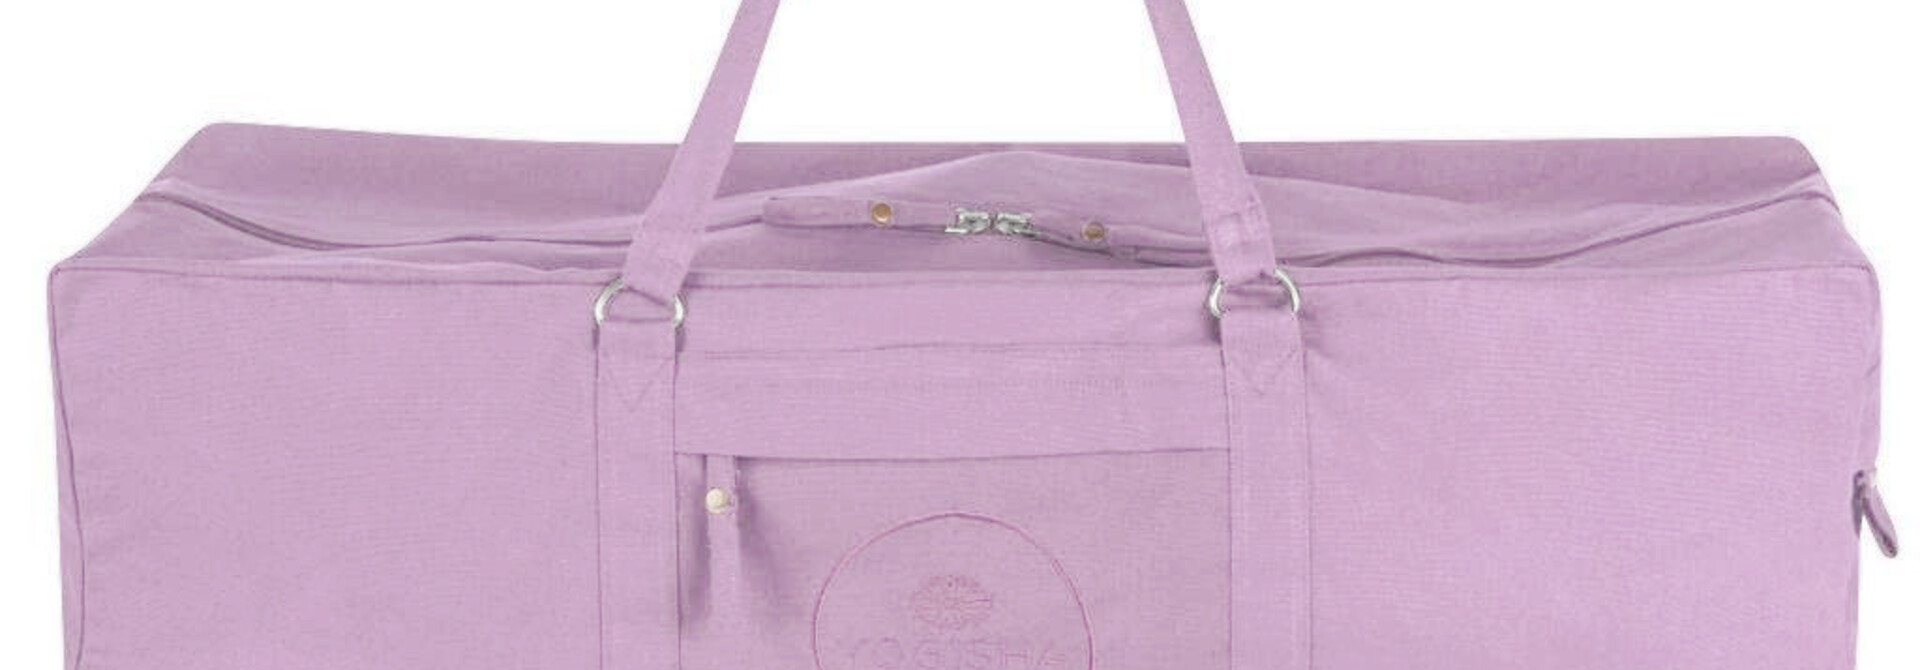 Yogisha Large Yoga Bag with Short Handles - Light Pink